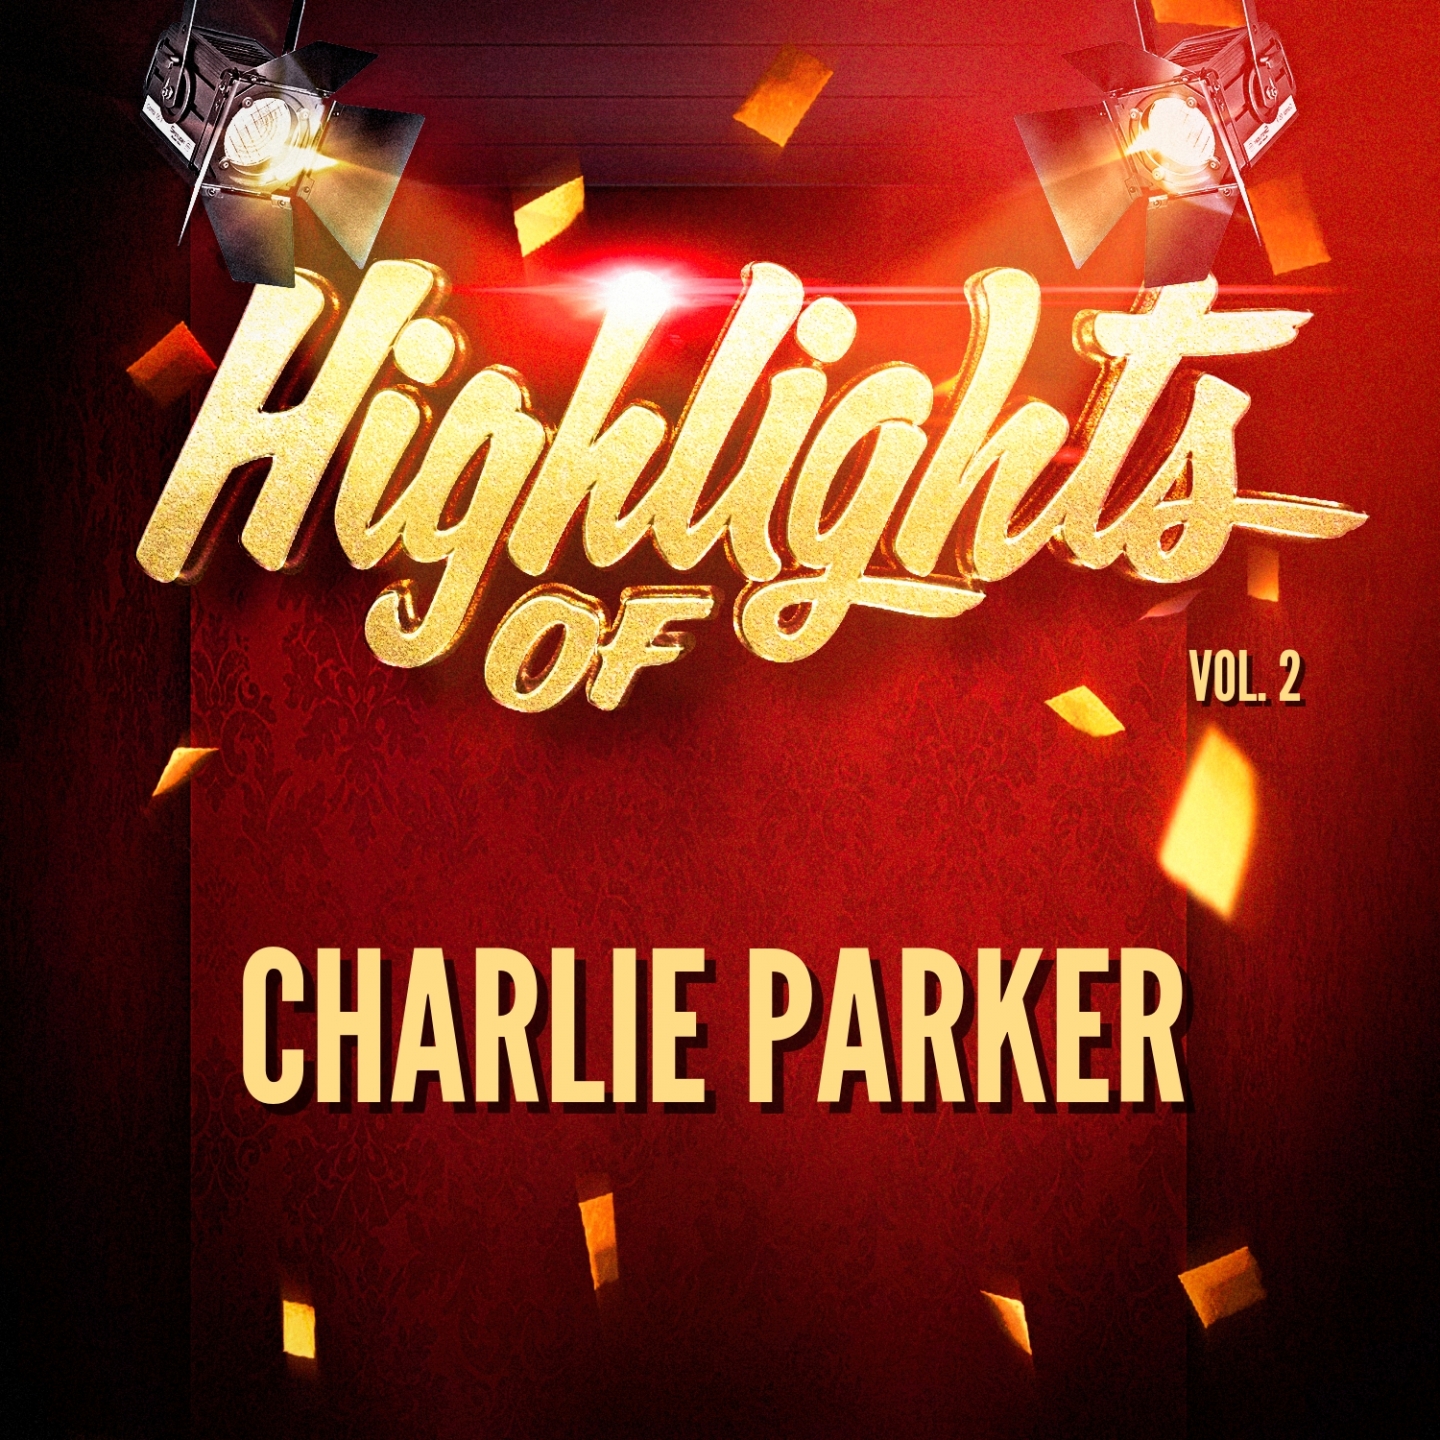 Highlights of Charlie Parker, Vol. 2